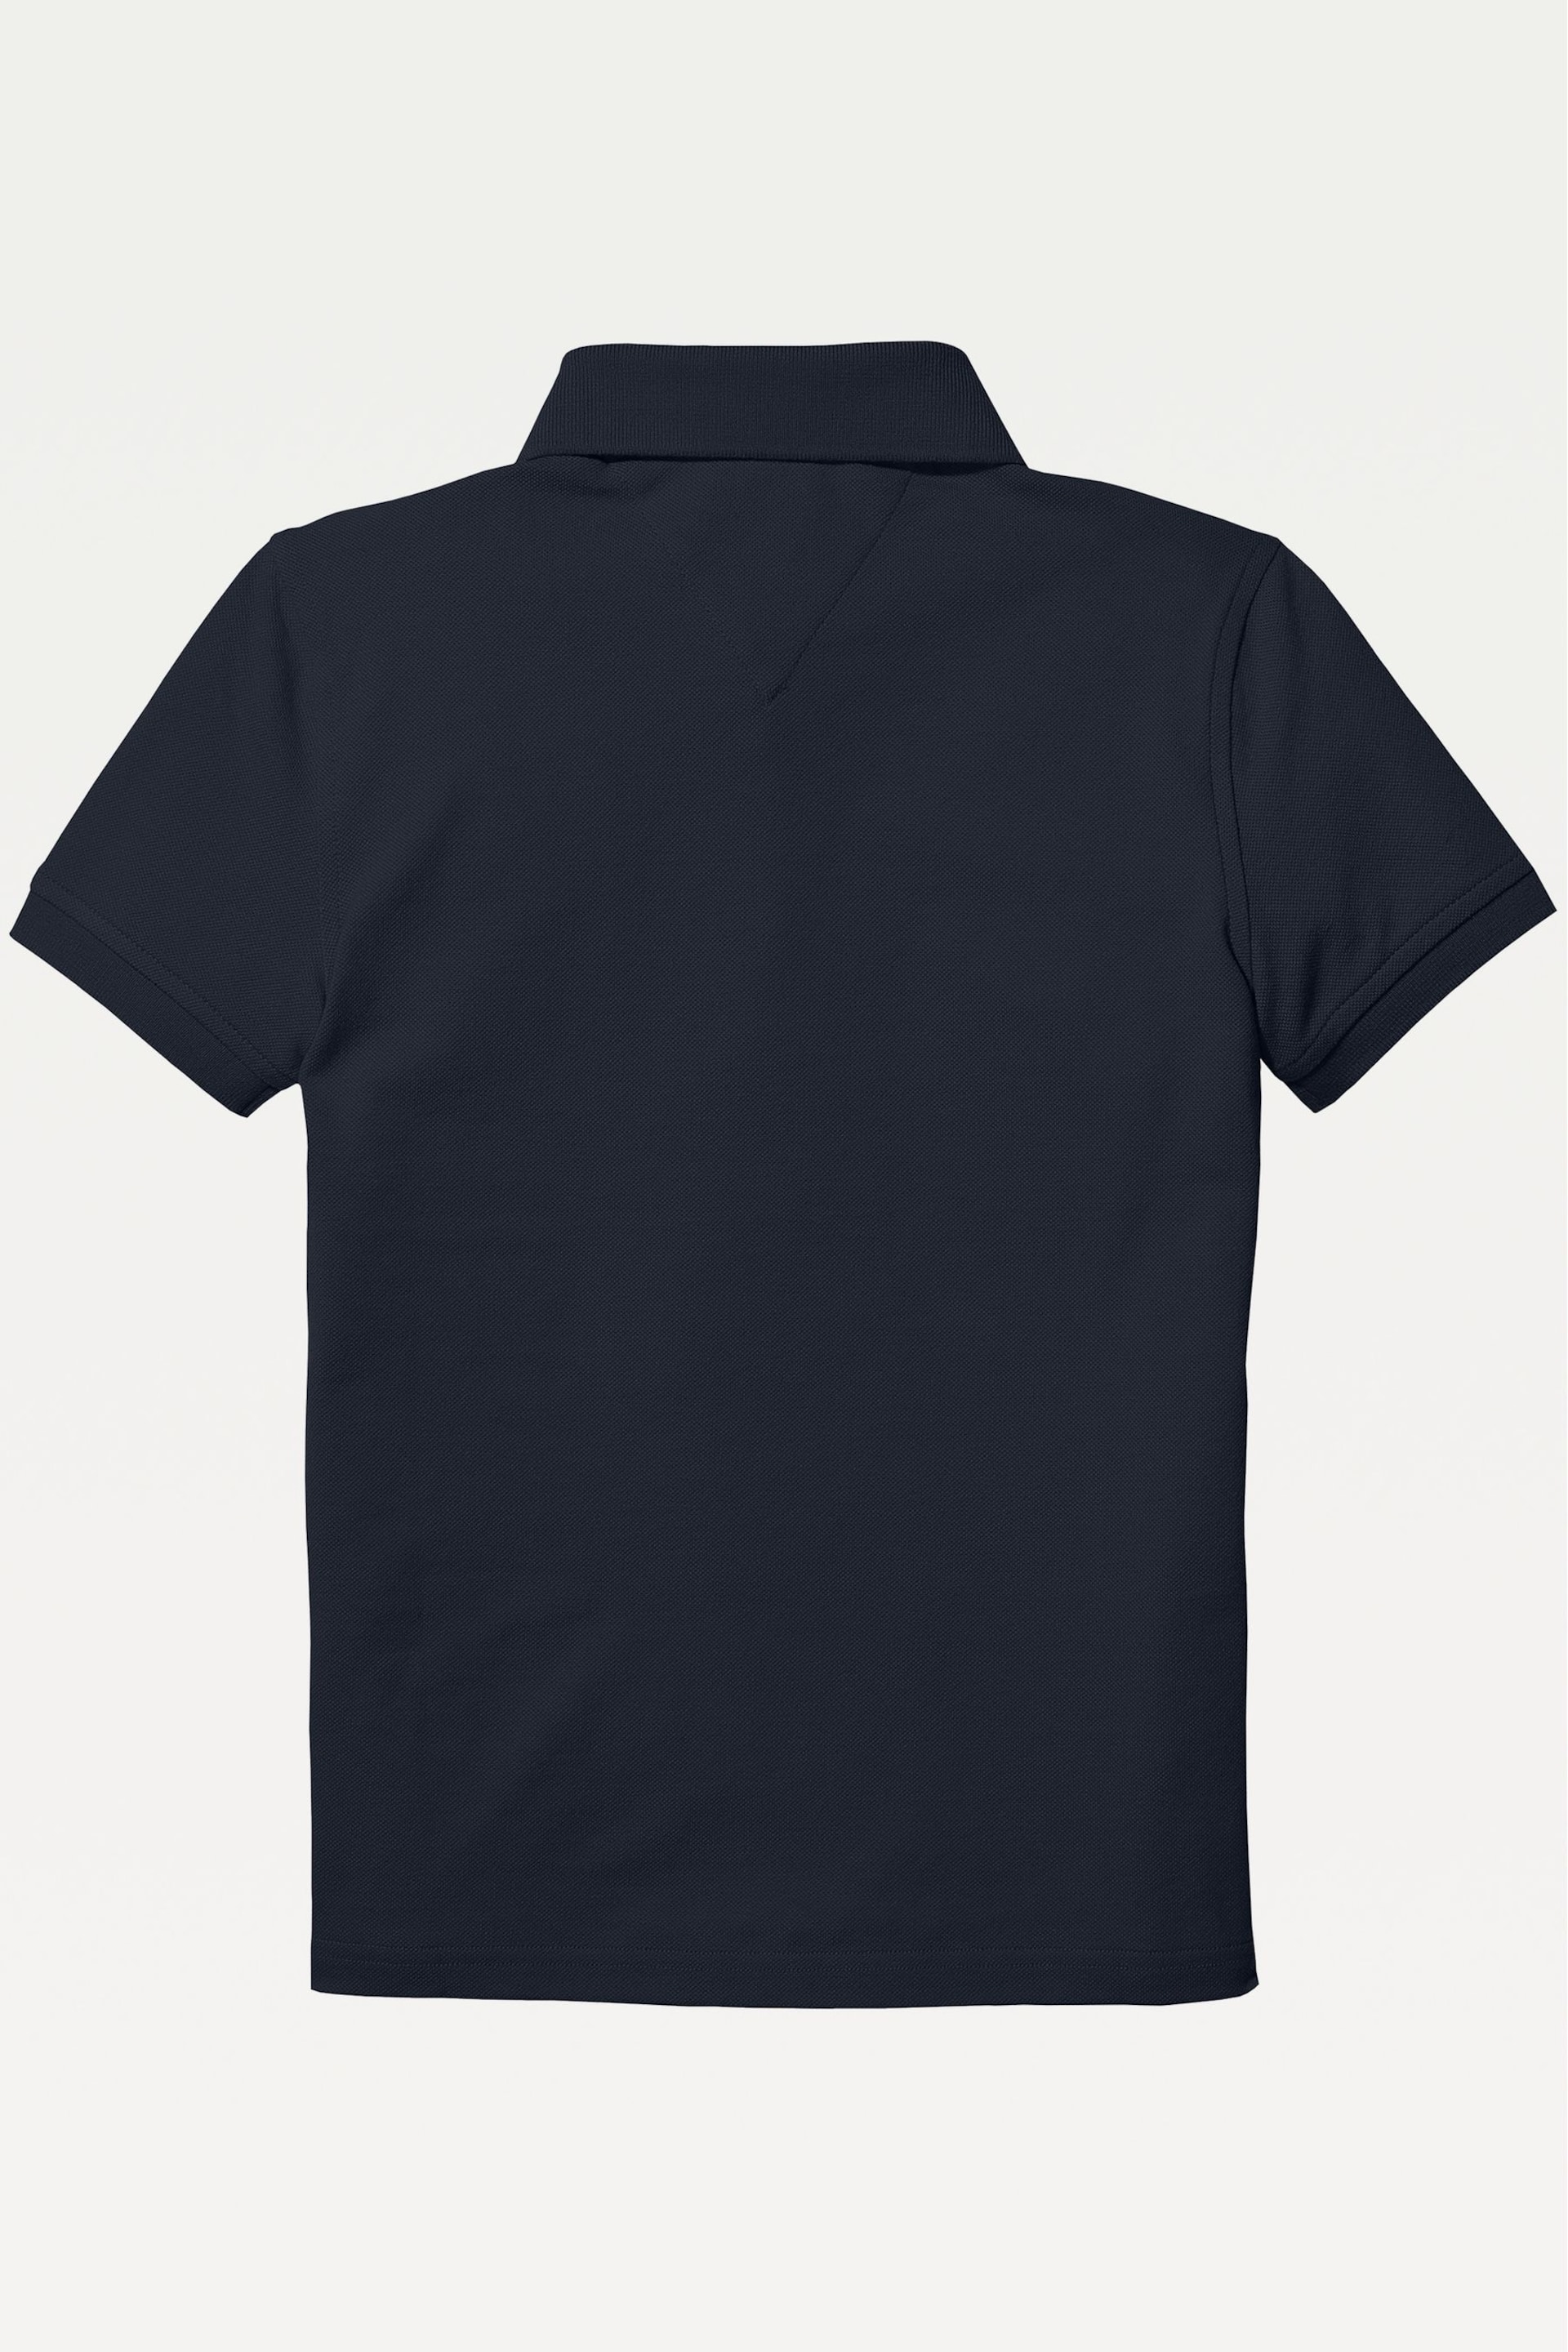 Tommy Hilfiger Boys Basic Polo Shirt - Image 5 of 5